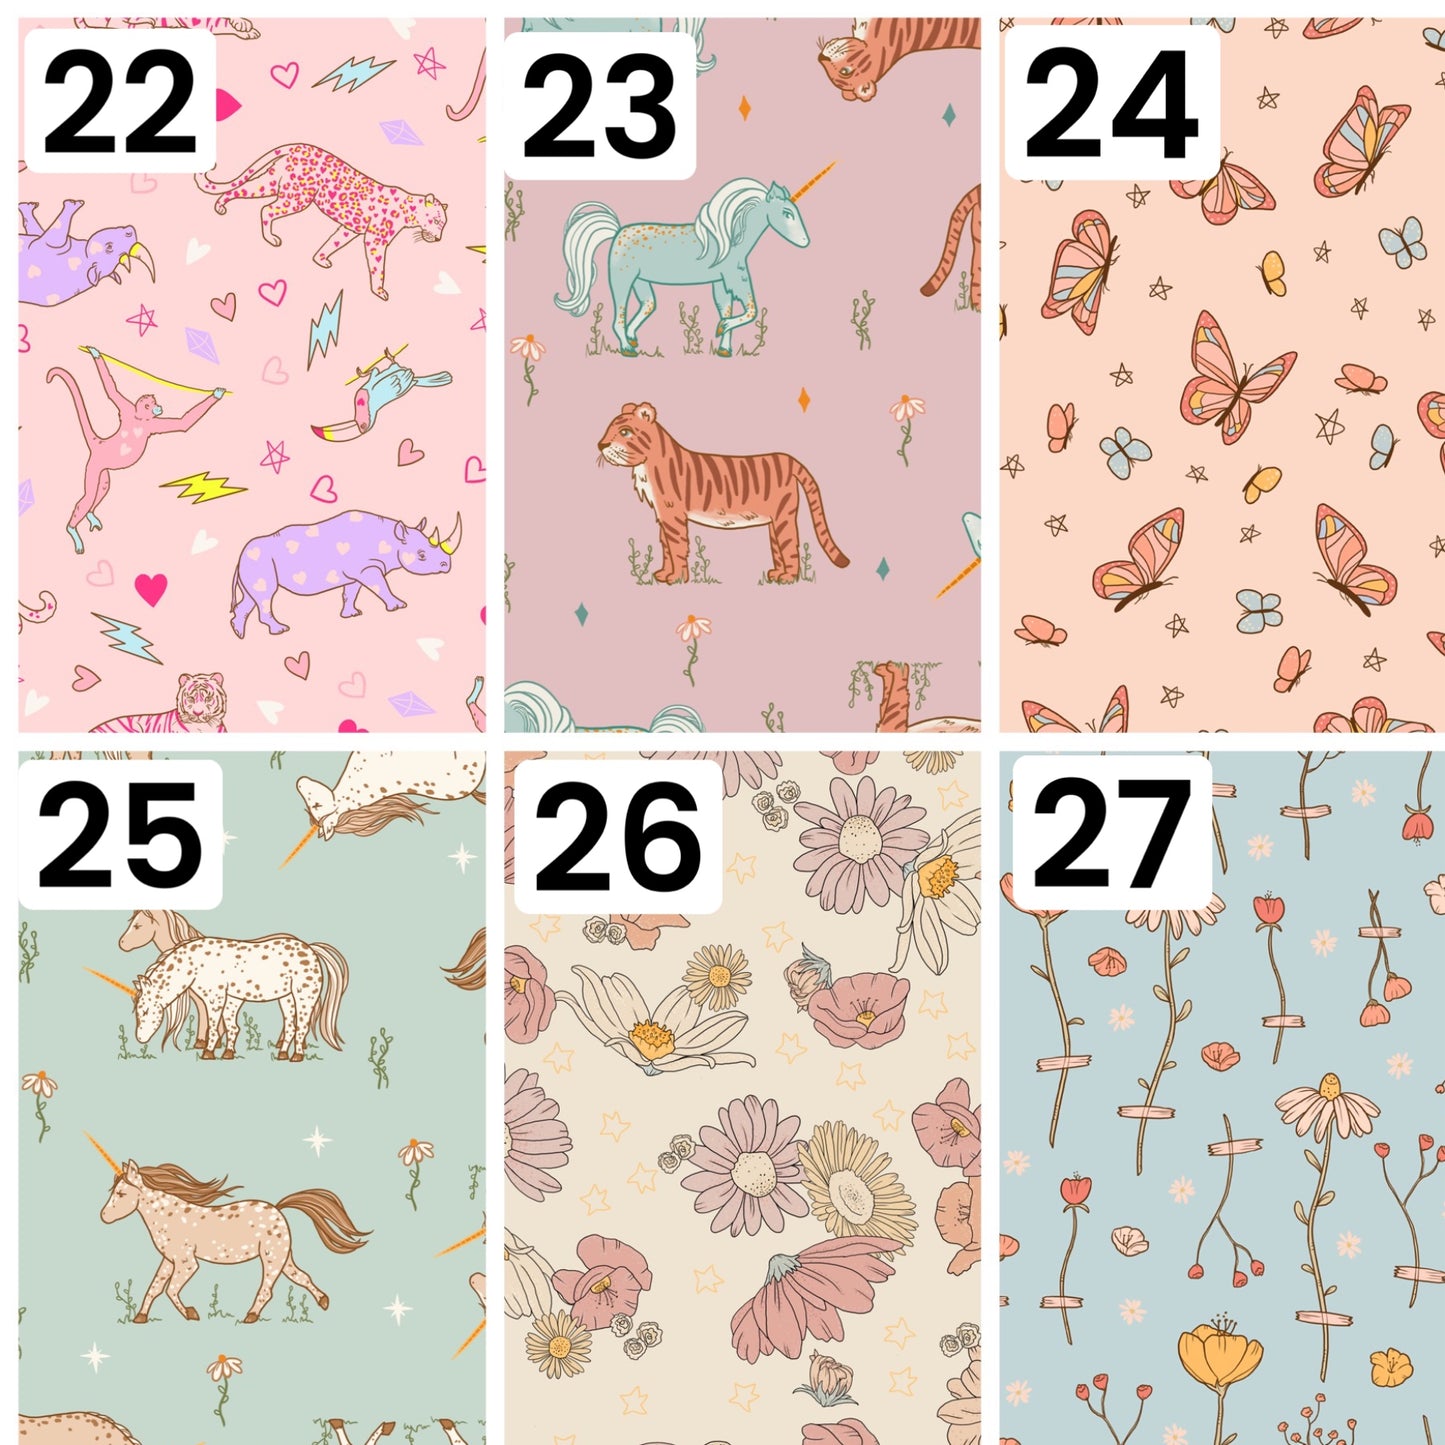 Customized Krystal Winn Mink Blankets numbers 22-27.